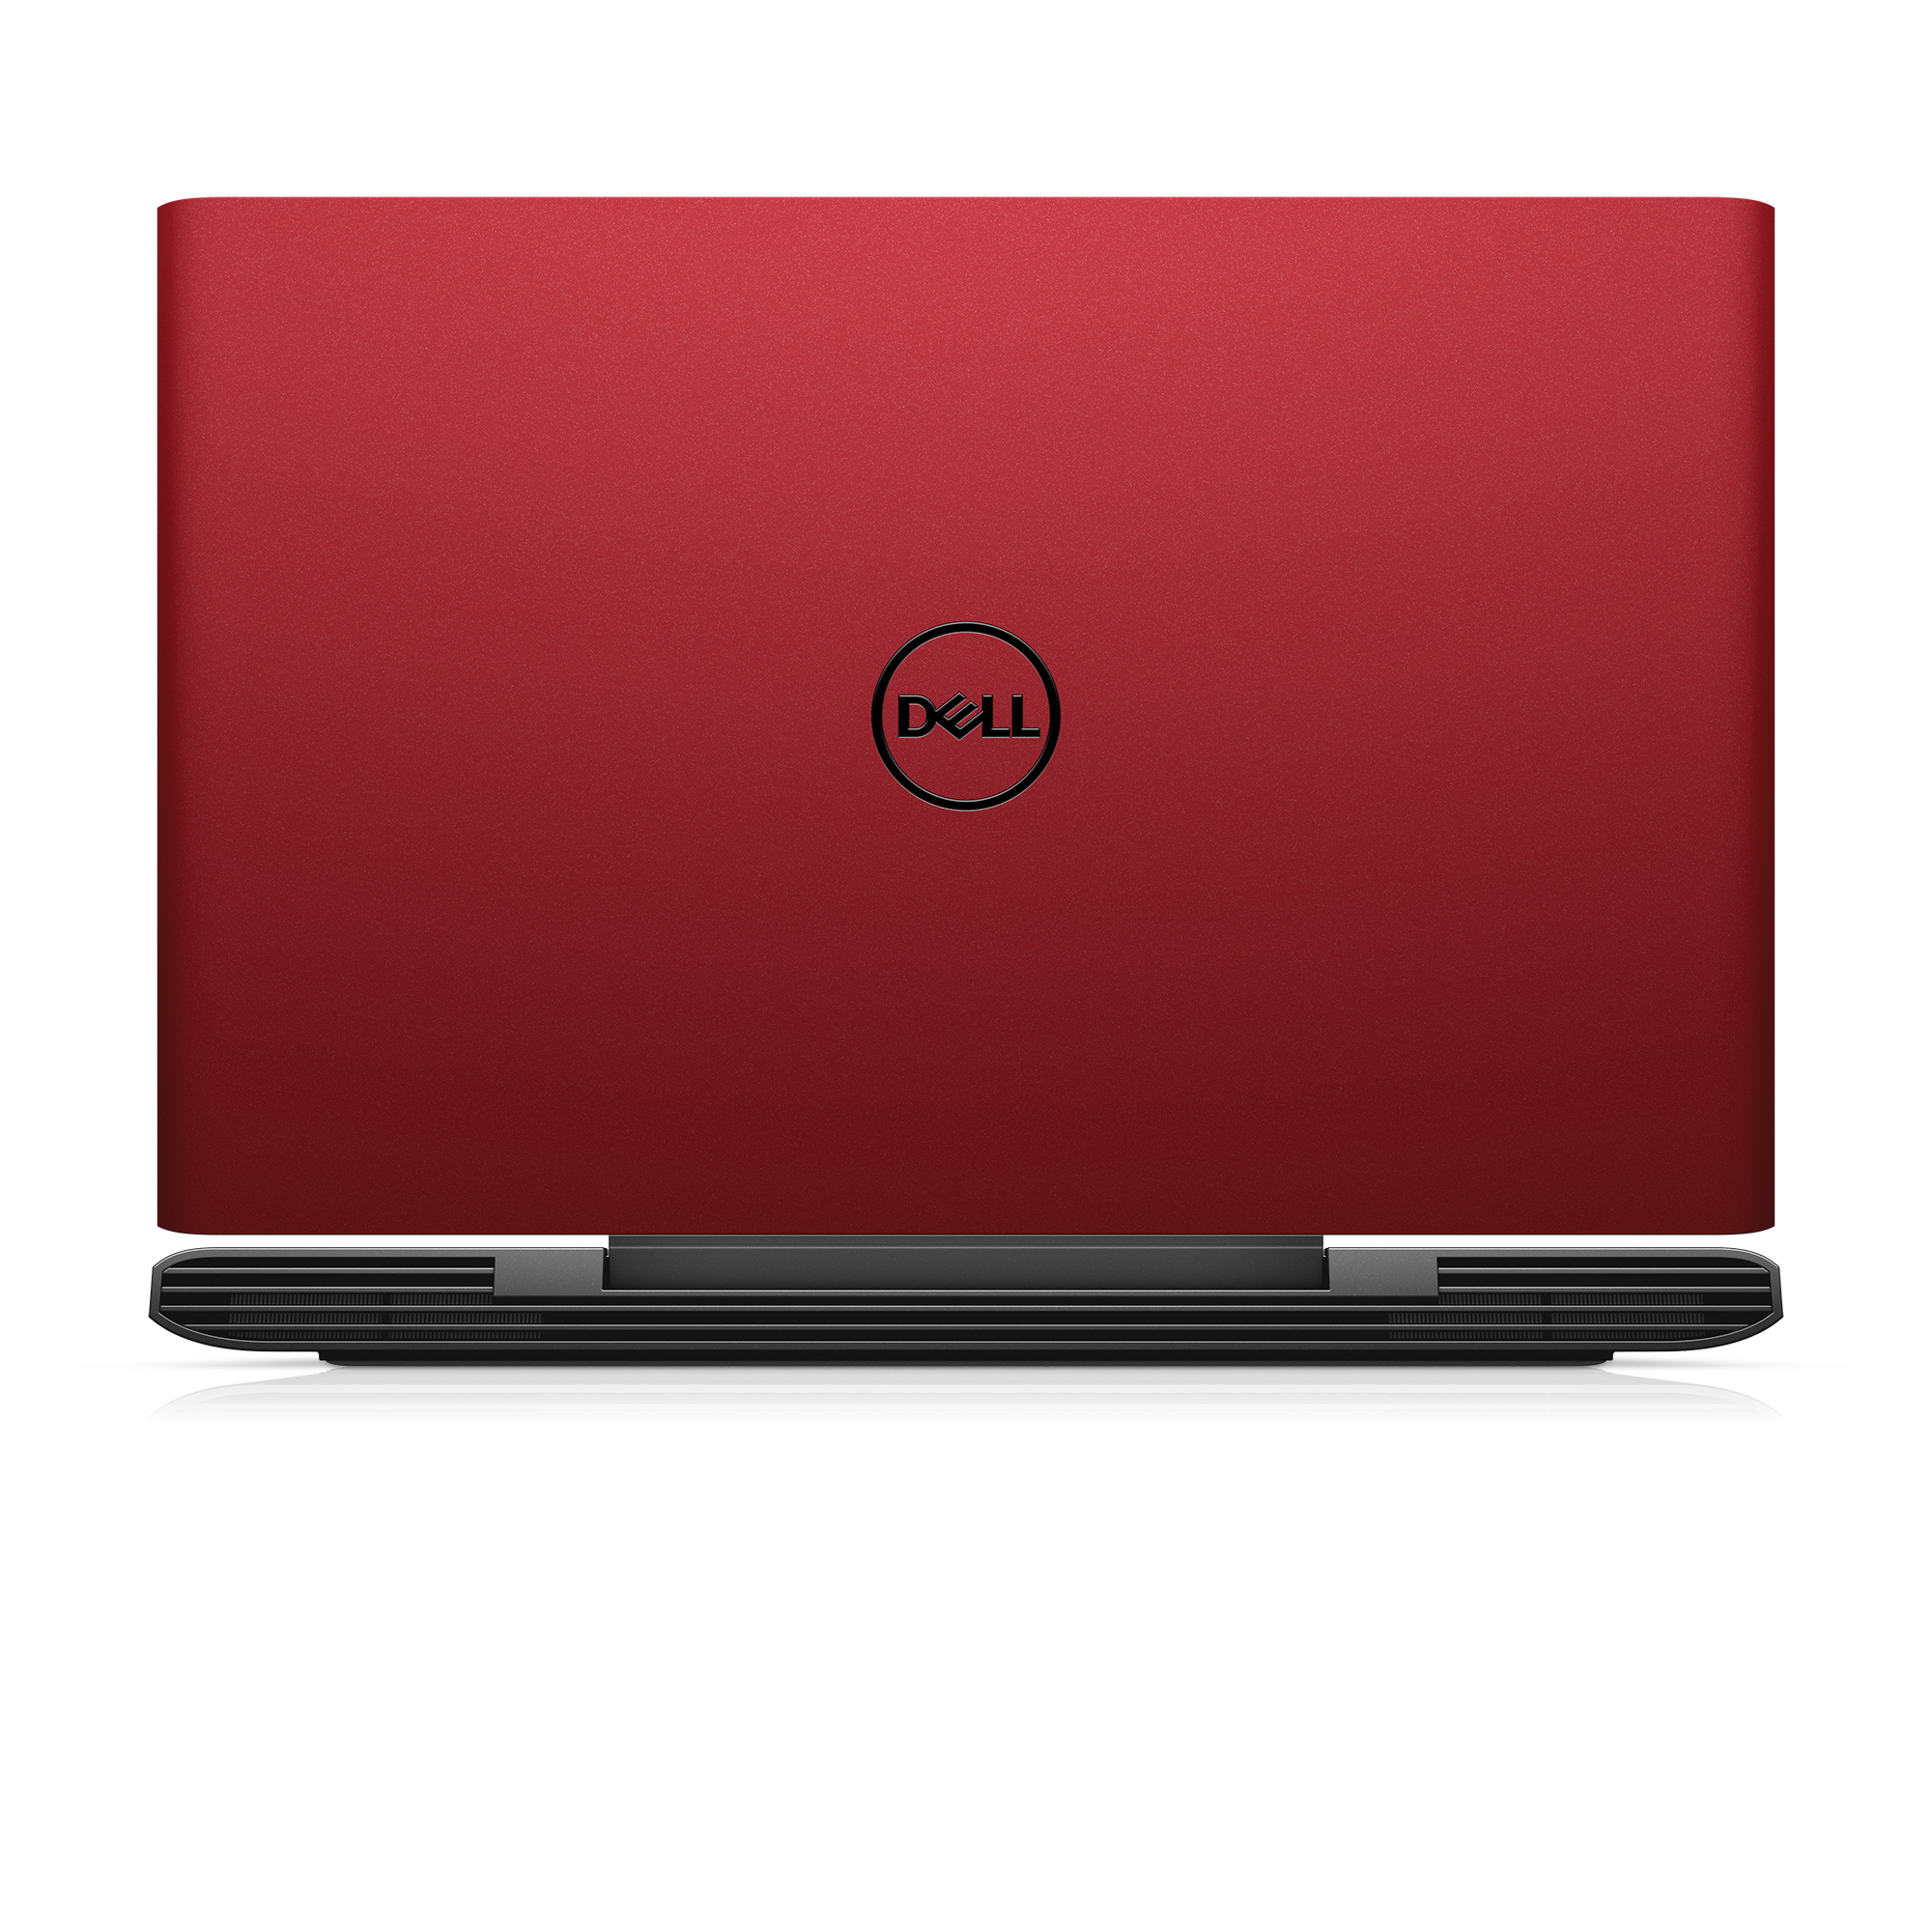 Dell G5 Gaming Laptop 15.6" Full HD, Intel Core i5-8300H, NVIDIA GeForce GTX 1060 6GB, 256GB SSD + 1TB Storage, 16GB RAM, G5587-5559RED - image 2 of 3